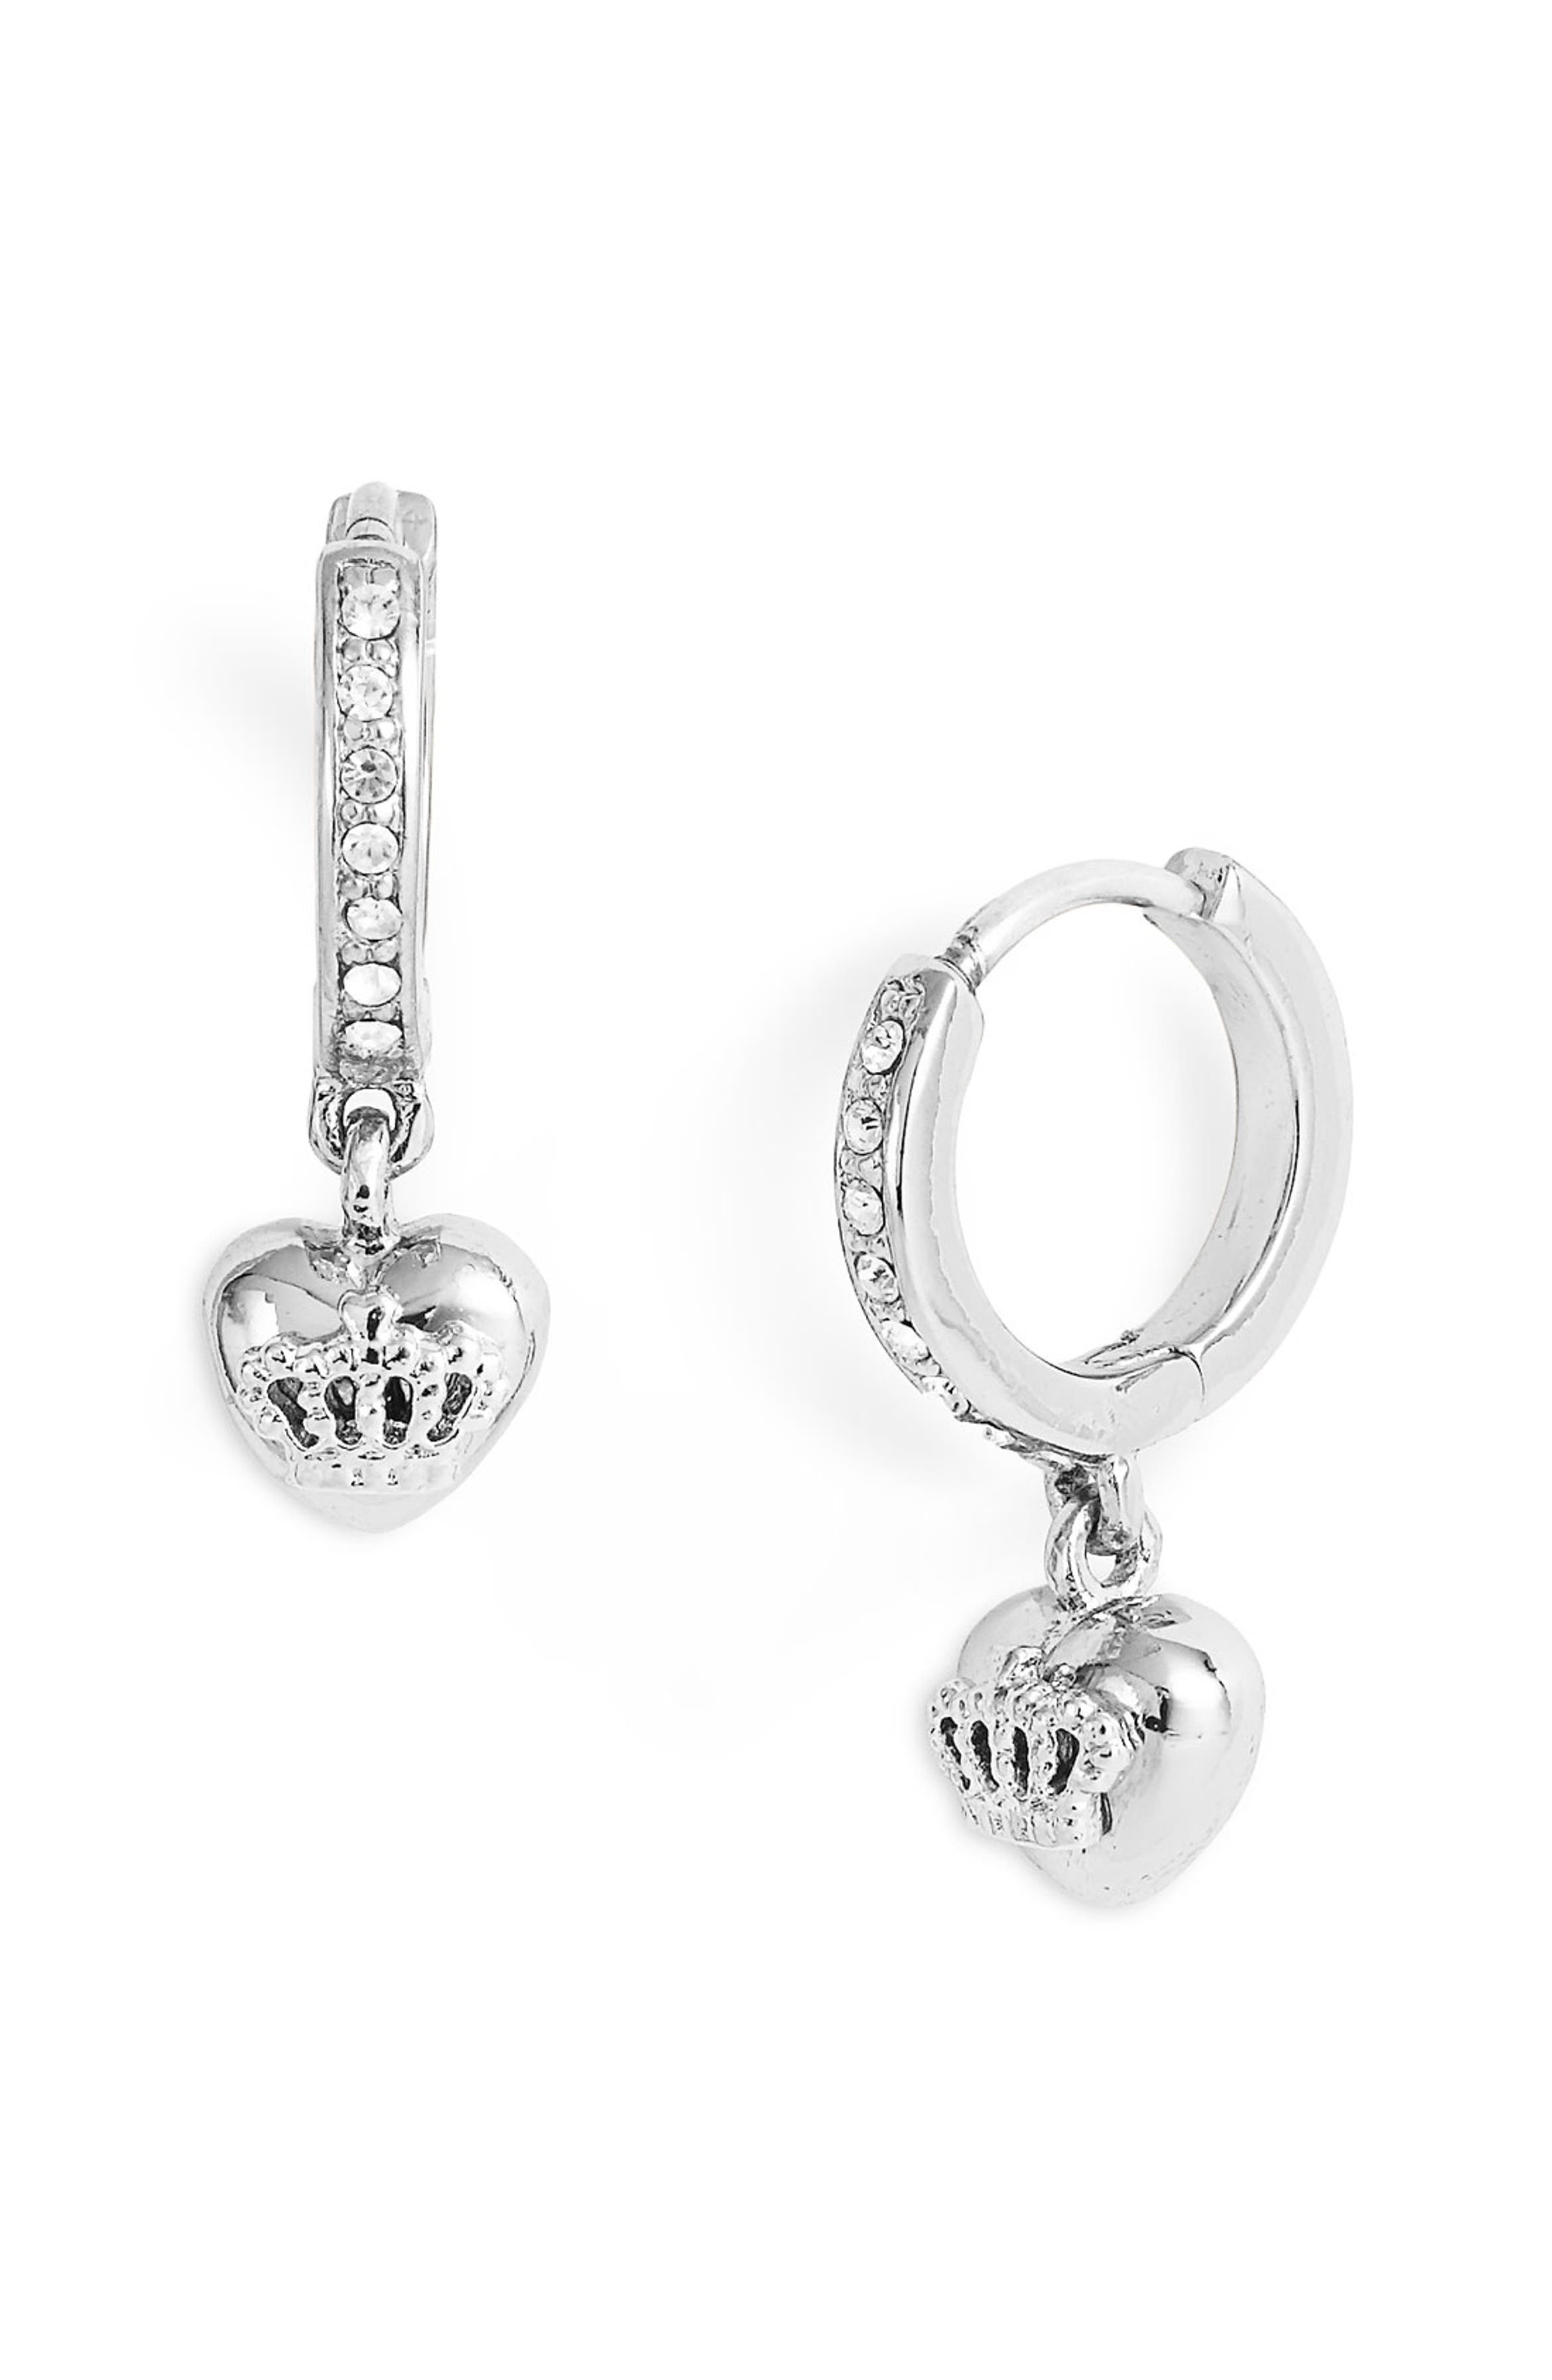 Juicy Couture 'Crown Icons' Tiny Heart & Hoop Earrings | Nordstrom